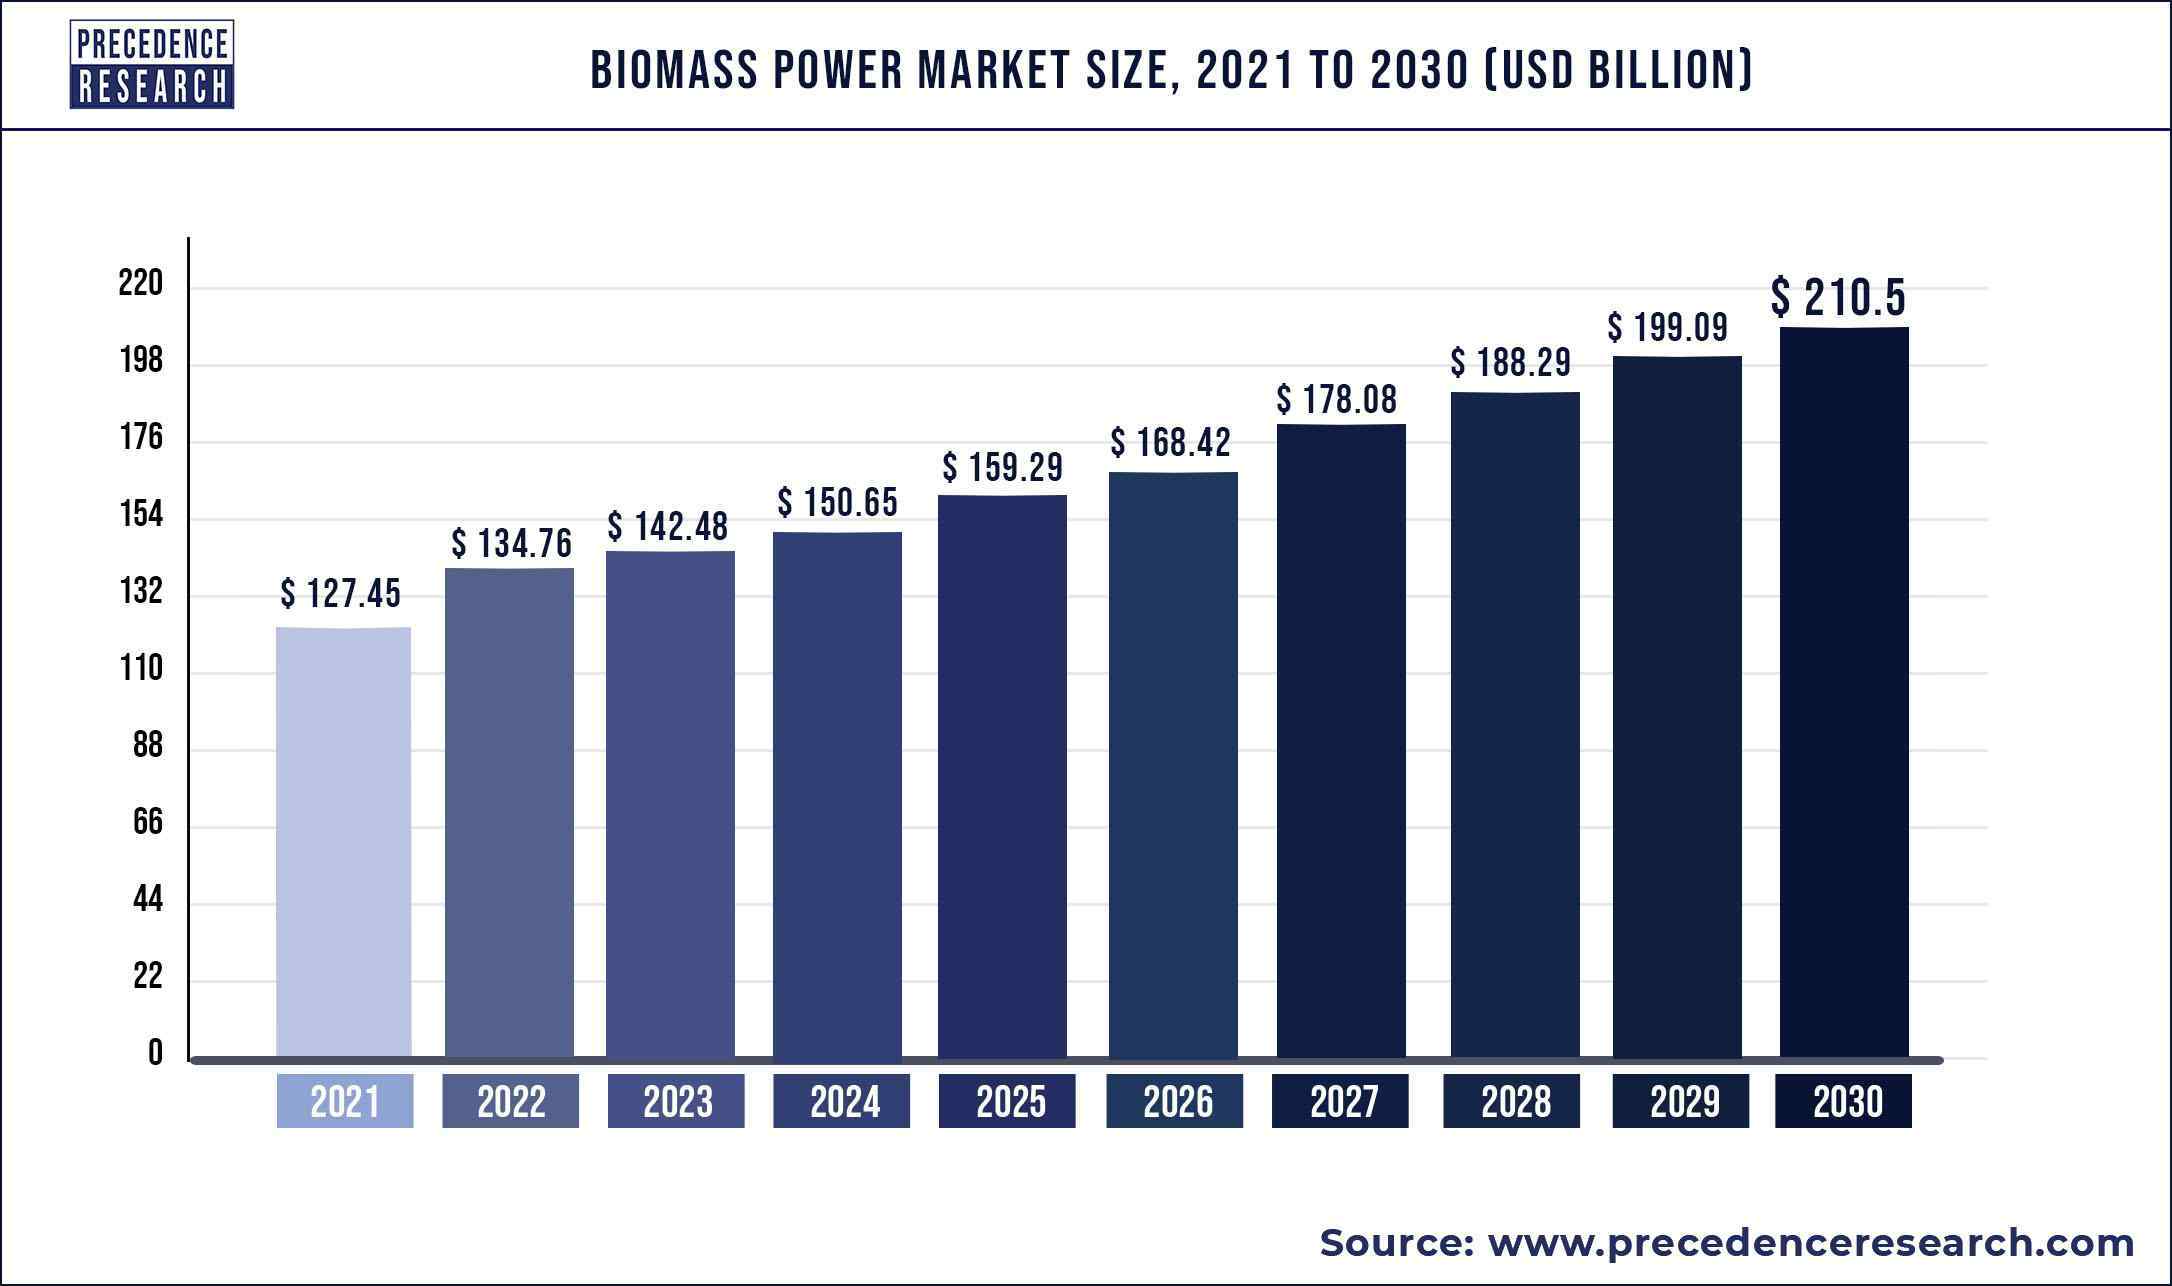 Biomass Power Market Size 2021 to 2030